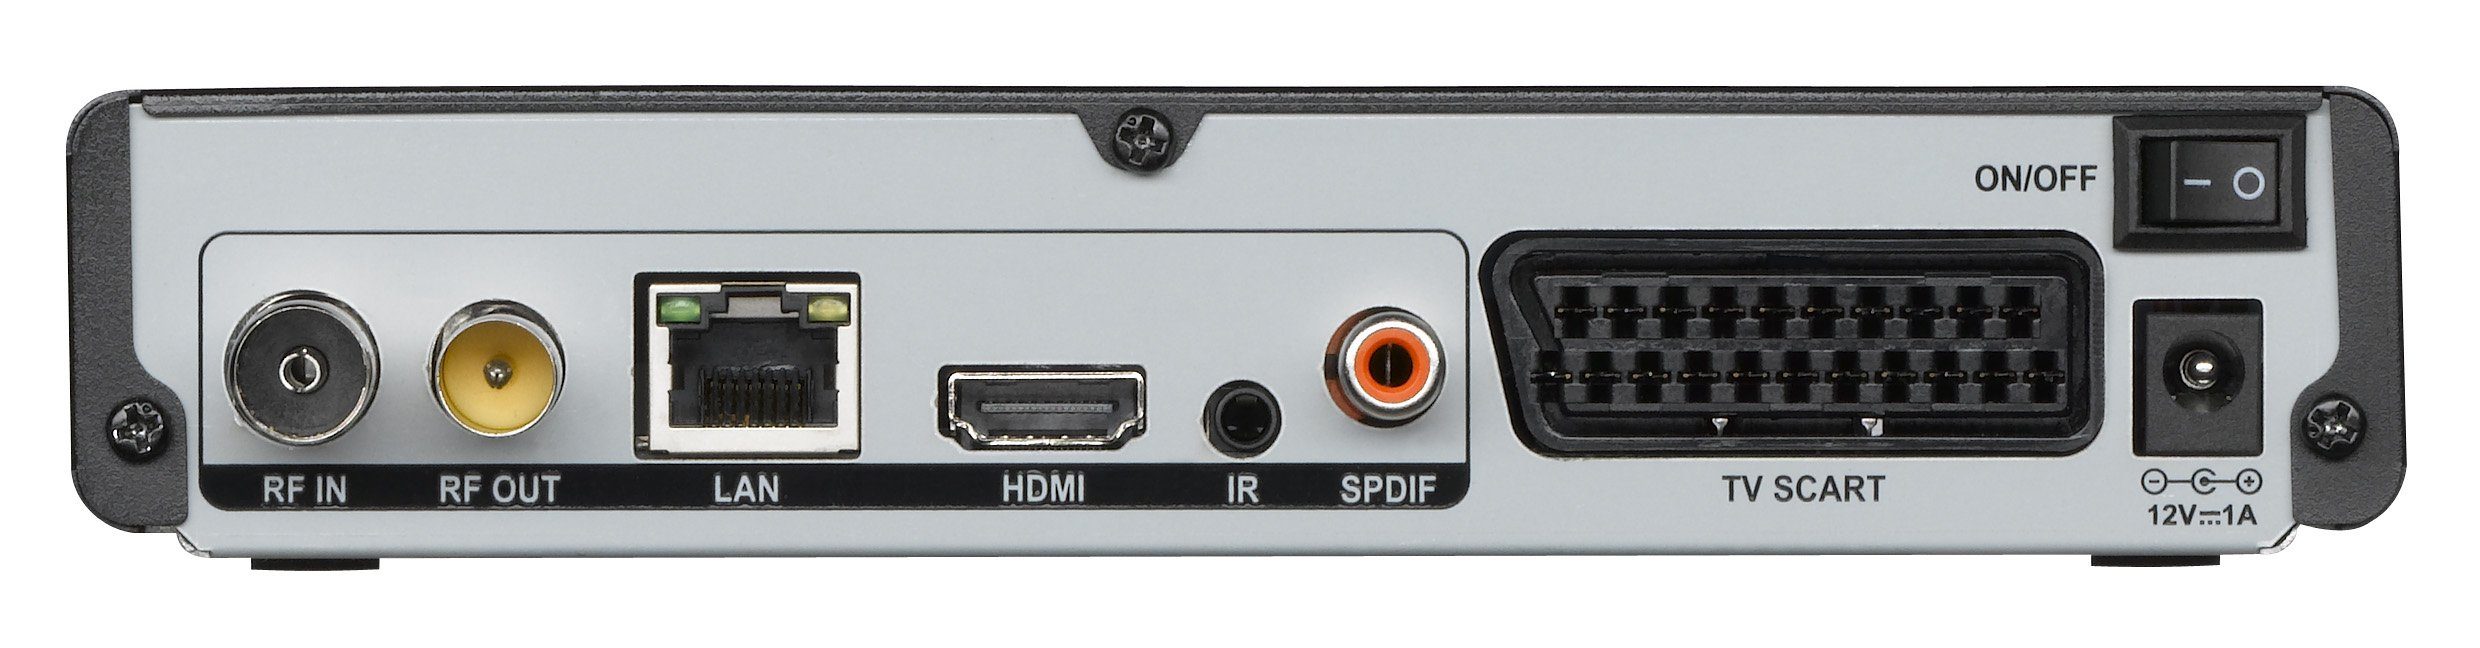 Comag COMAG SL65T2 FullHD DVBT/T2 HEVC HDMI, HD HDTV, DVB-T2 Receiver Receiver Irdeto (H.265